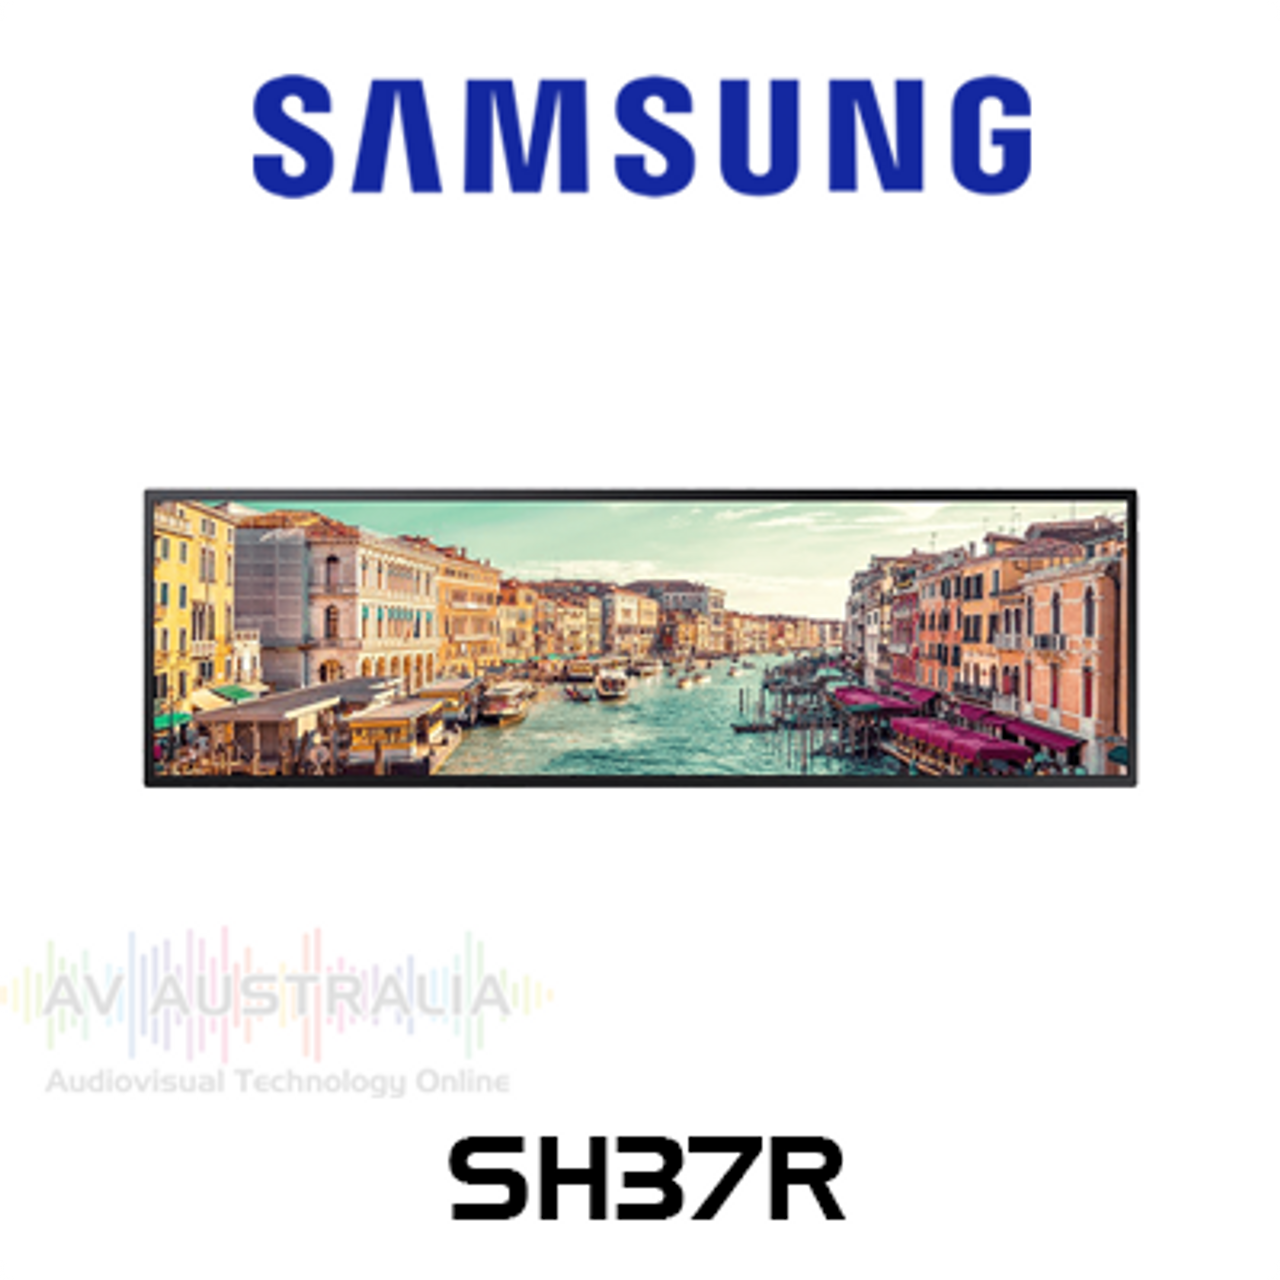 Samsung SH37R 37" Widescreen 24/7 Stretched Digital Signage